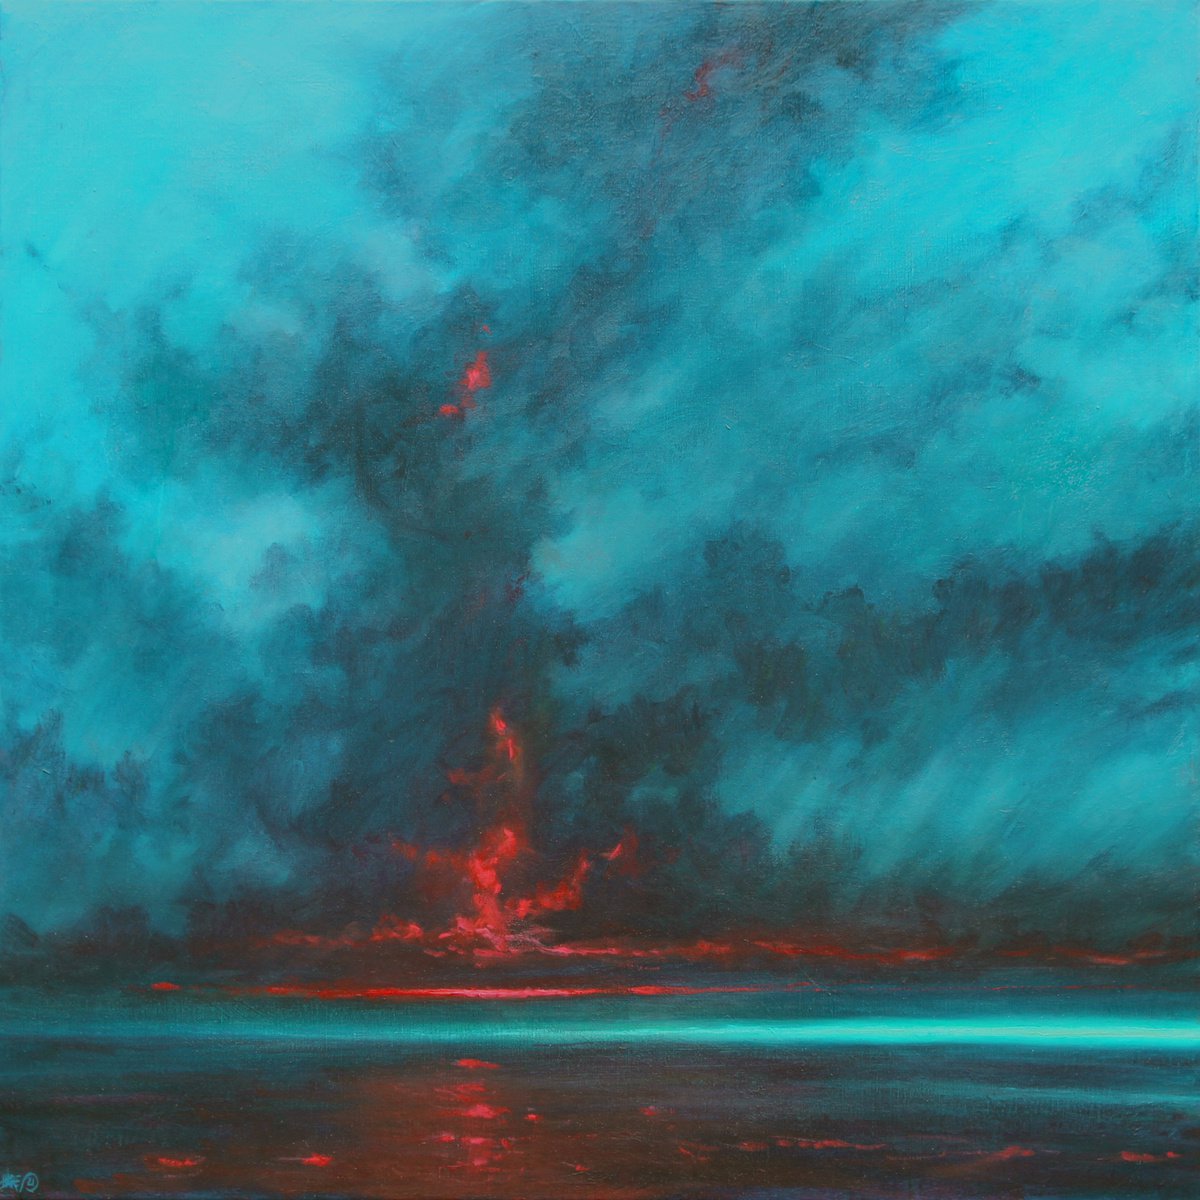 Skyfire by Derek Hare